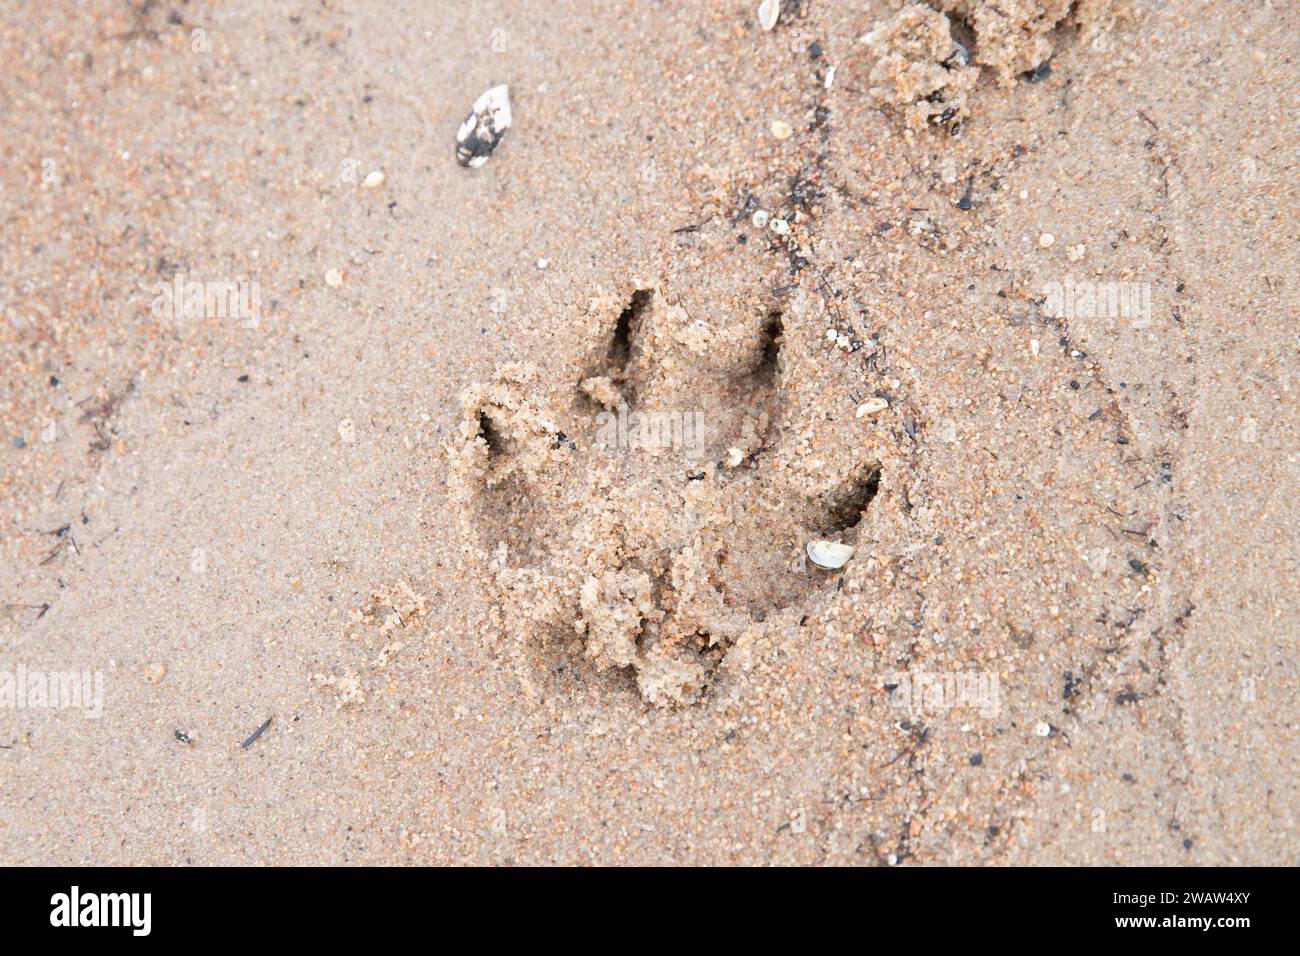 Dog paw print on the beach Stock Photo